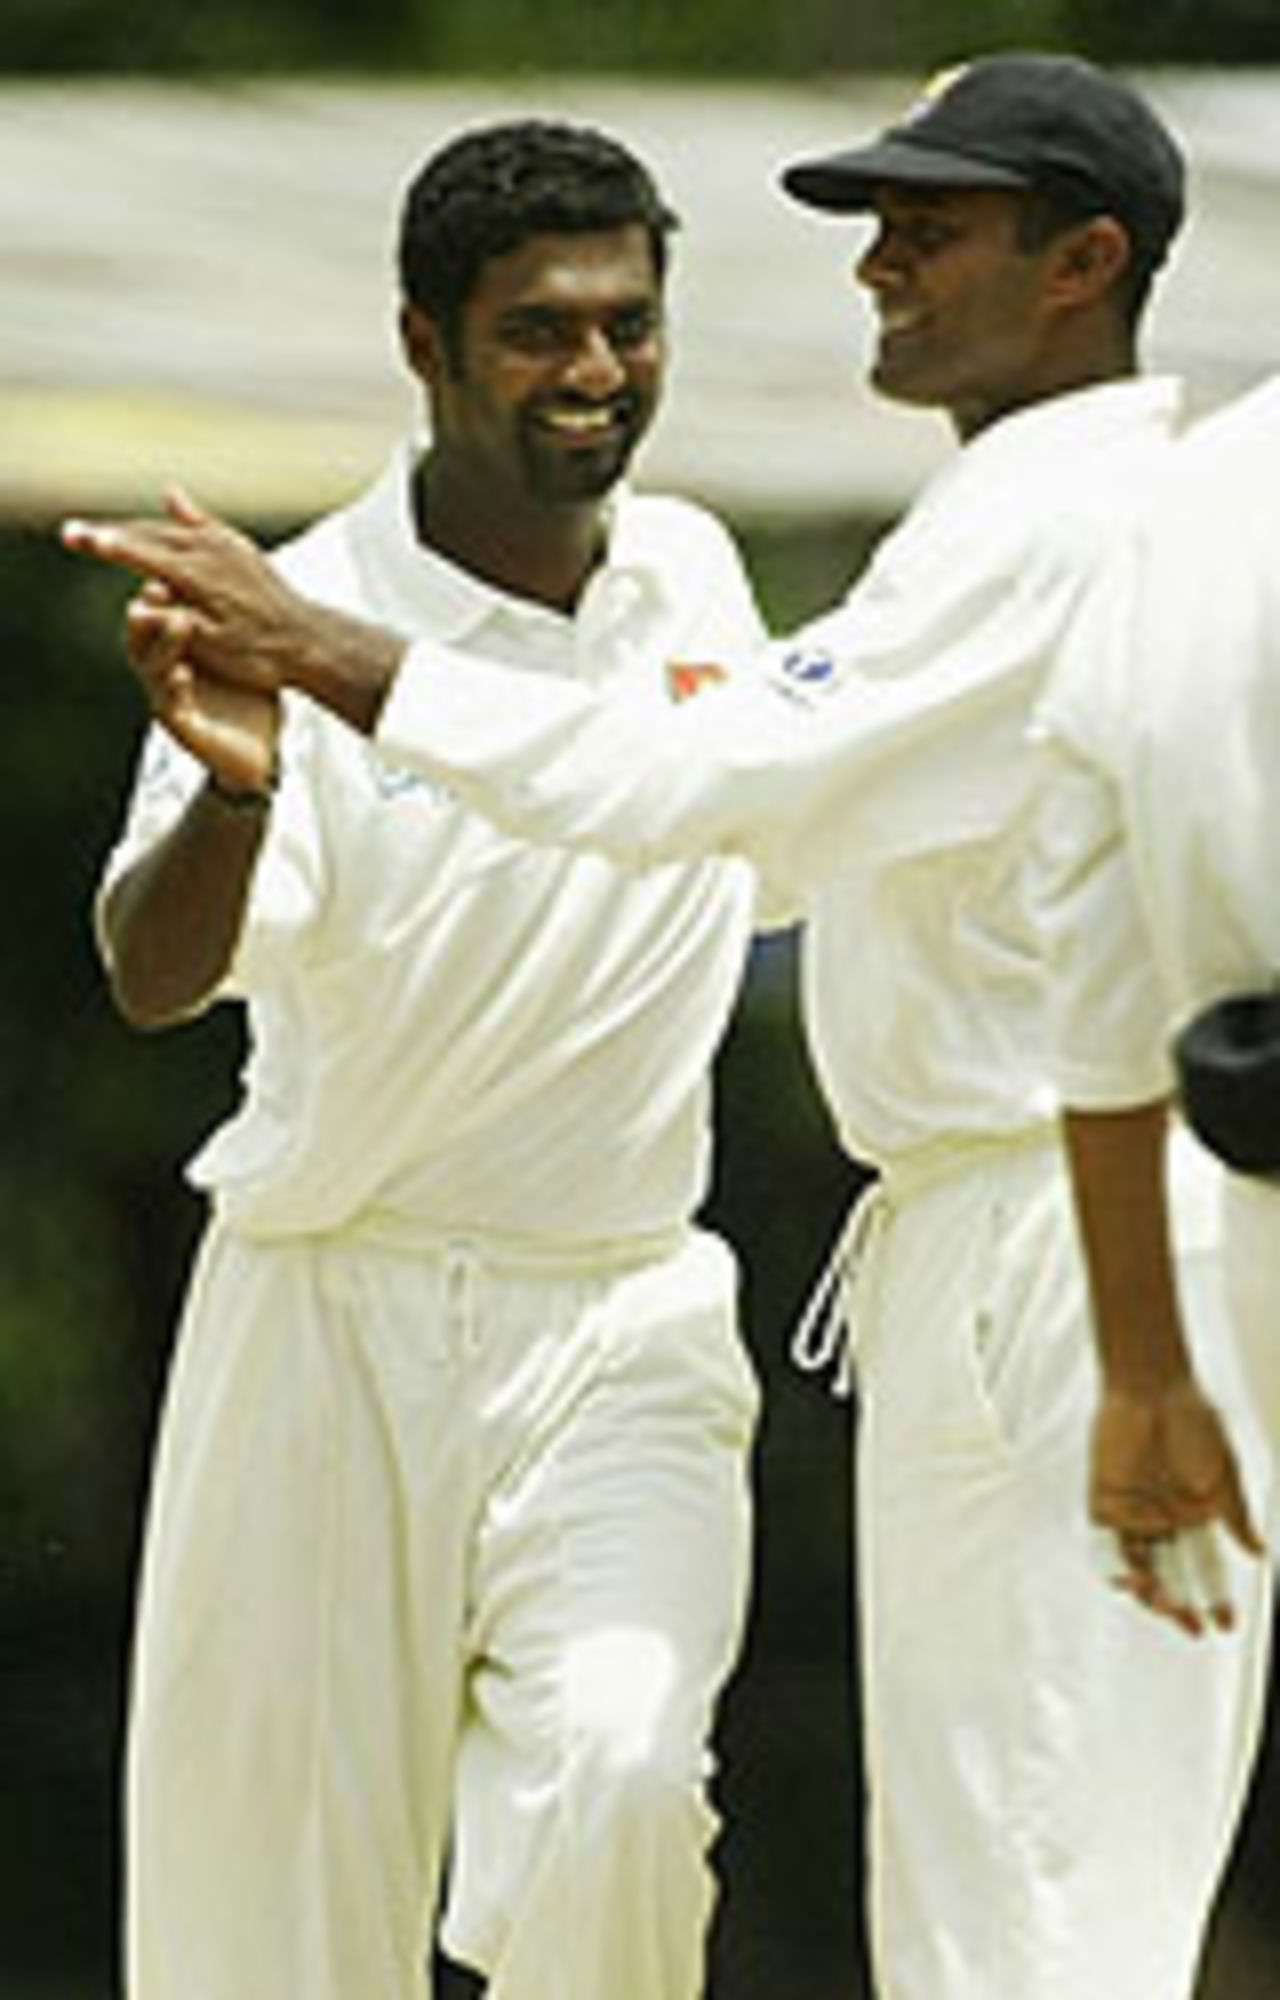 Muttiah Muralitharan slaps hands after dismissing a batsman, Sri Lanka v Australia, 2nd Test, Kandy, 1st day, March 16, 2004